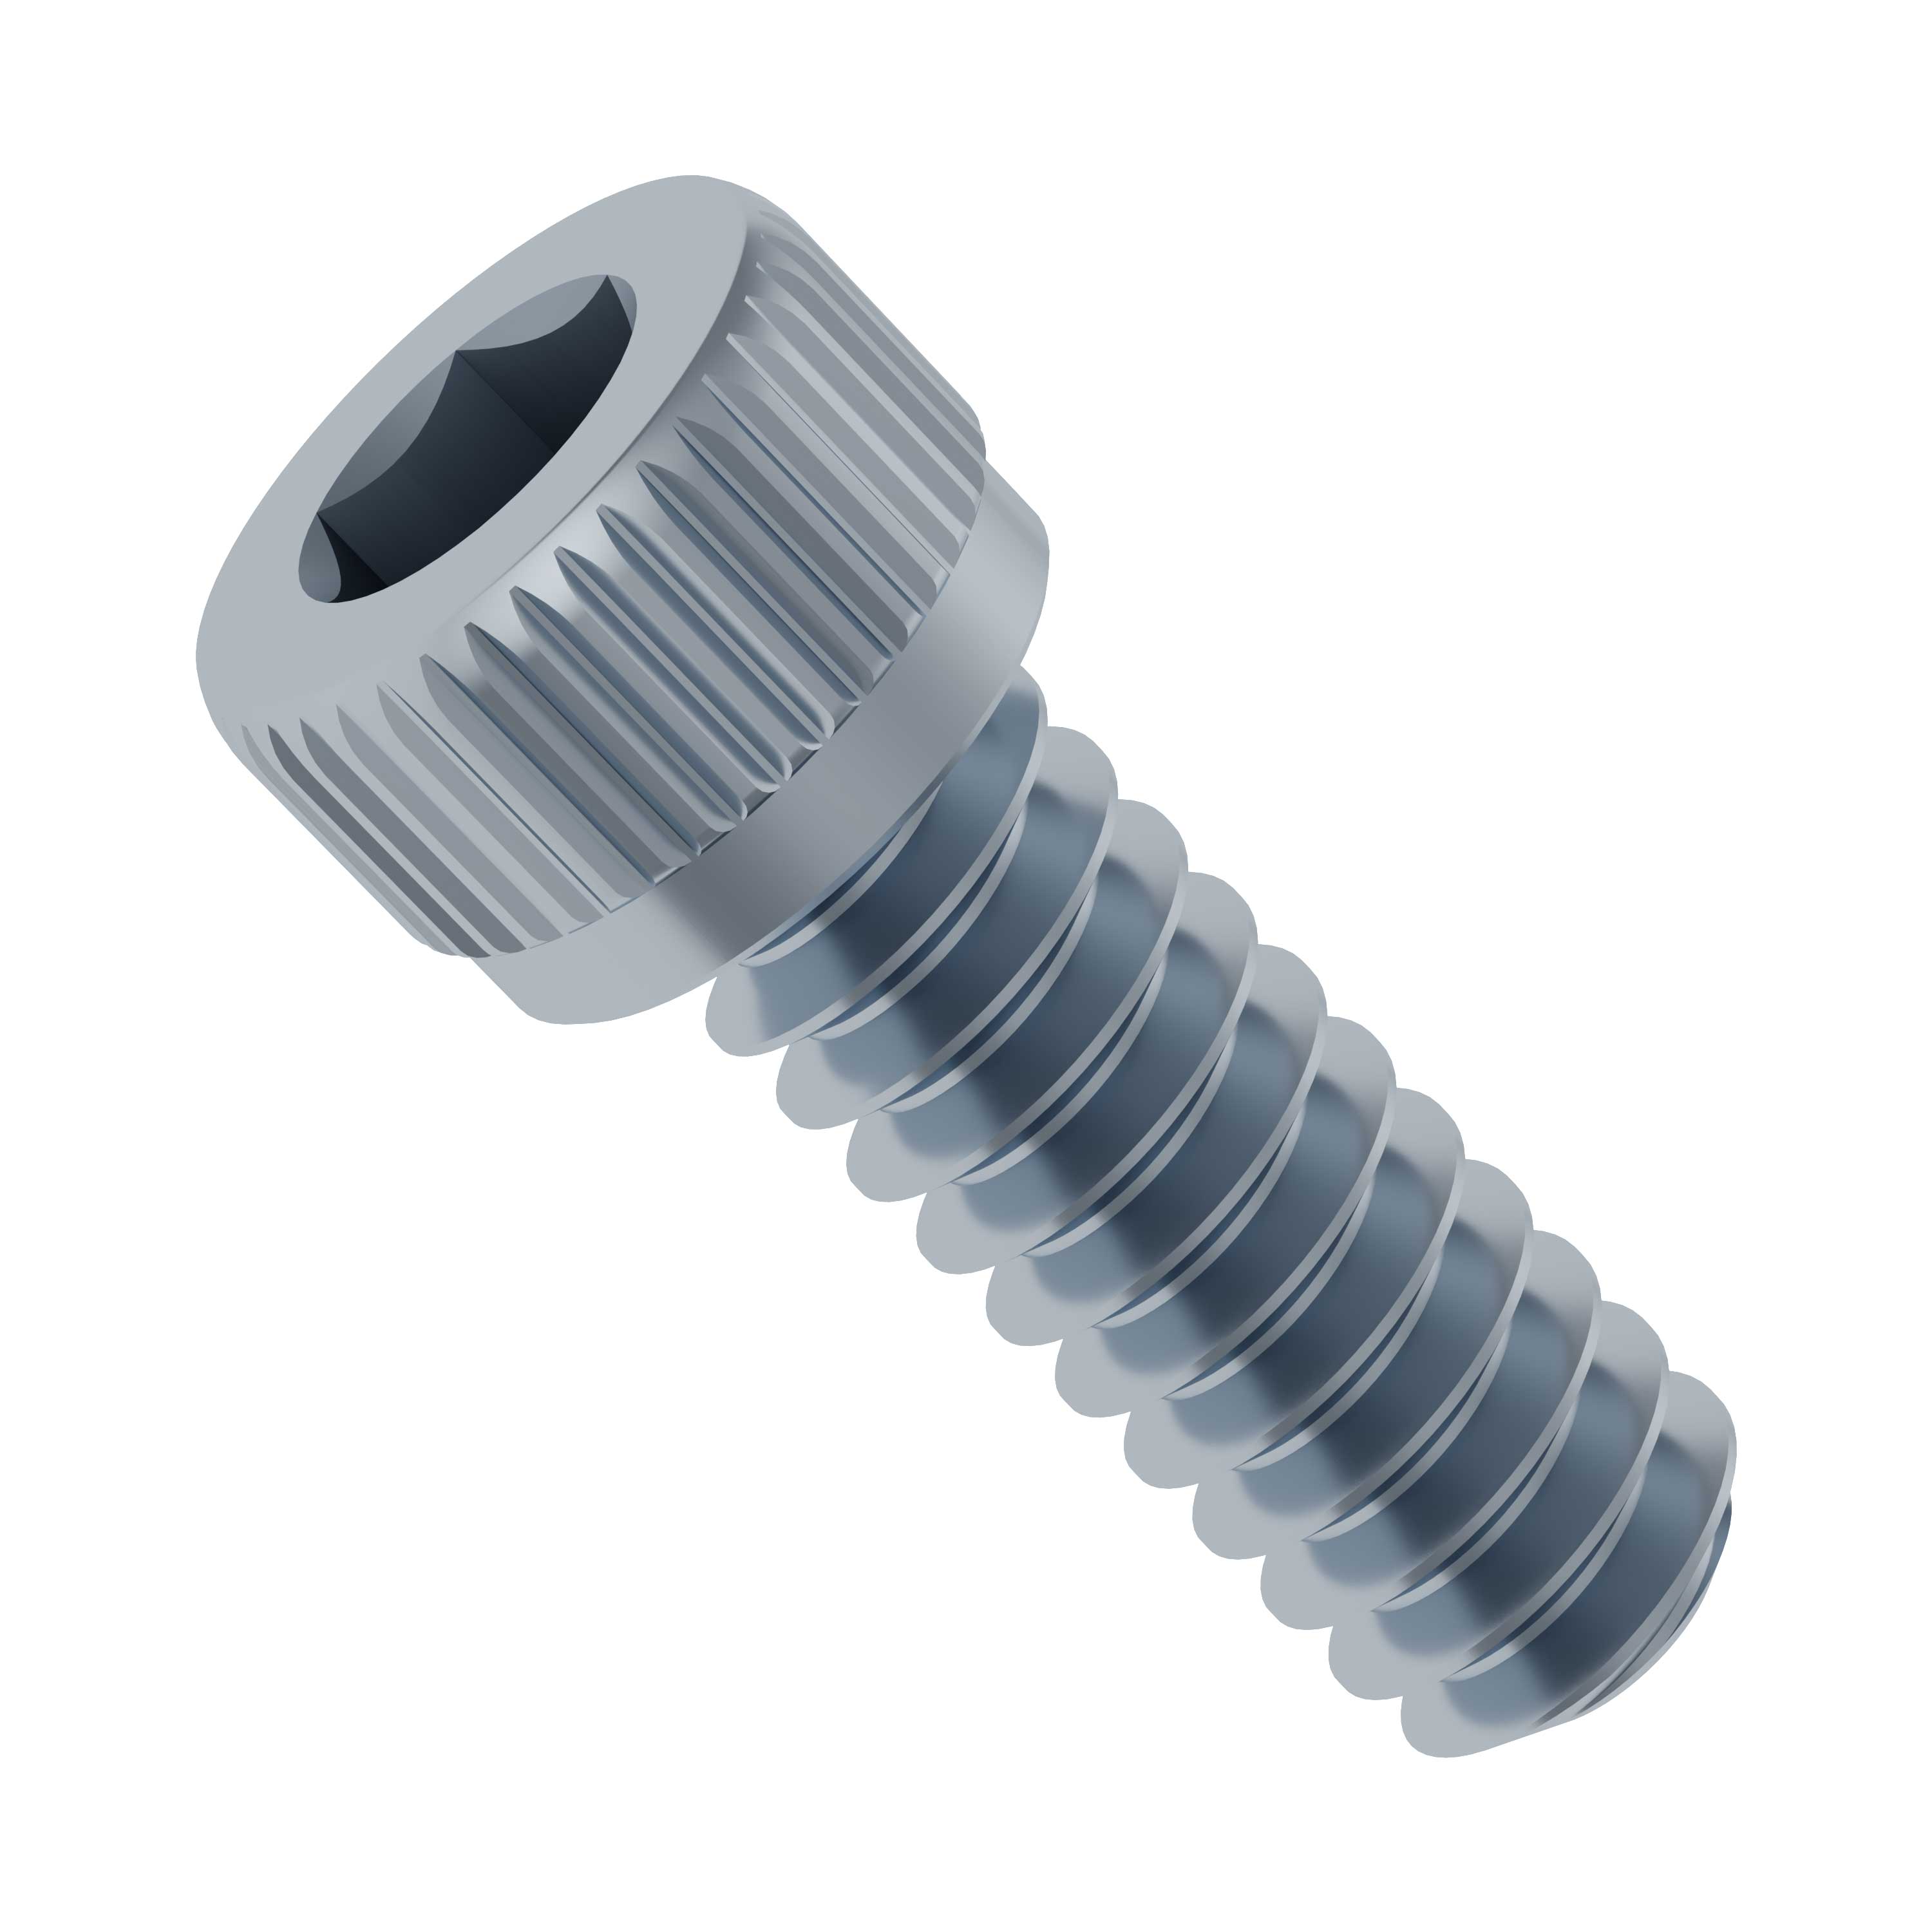 Zinc-Plated Steel Socket Head Screw (6-32 UNC, 3/8 Length) - 25 Pack